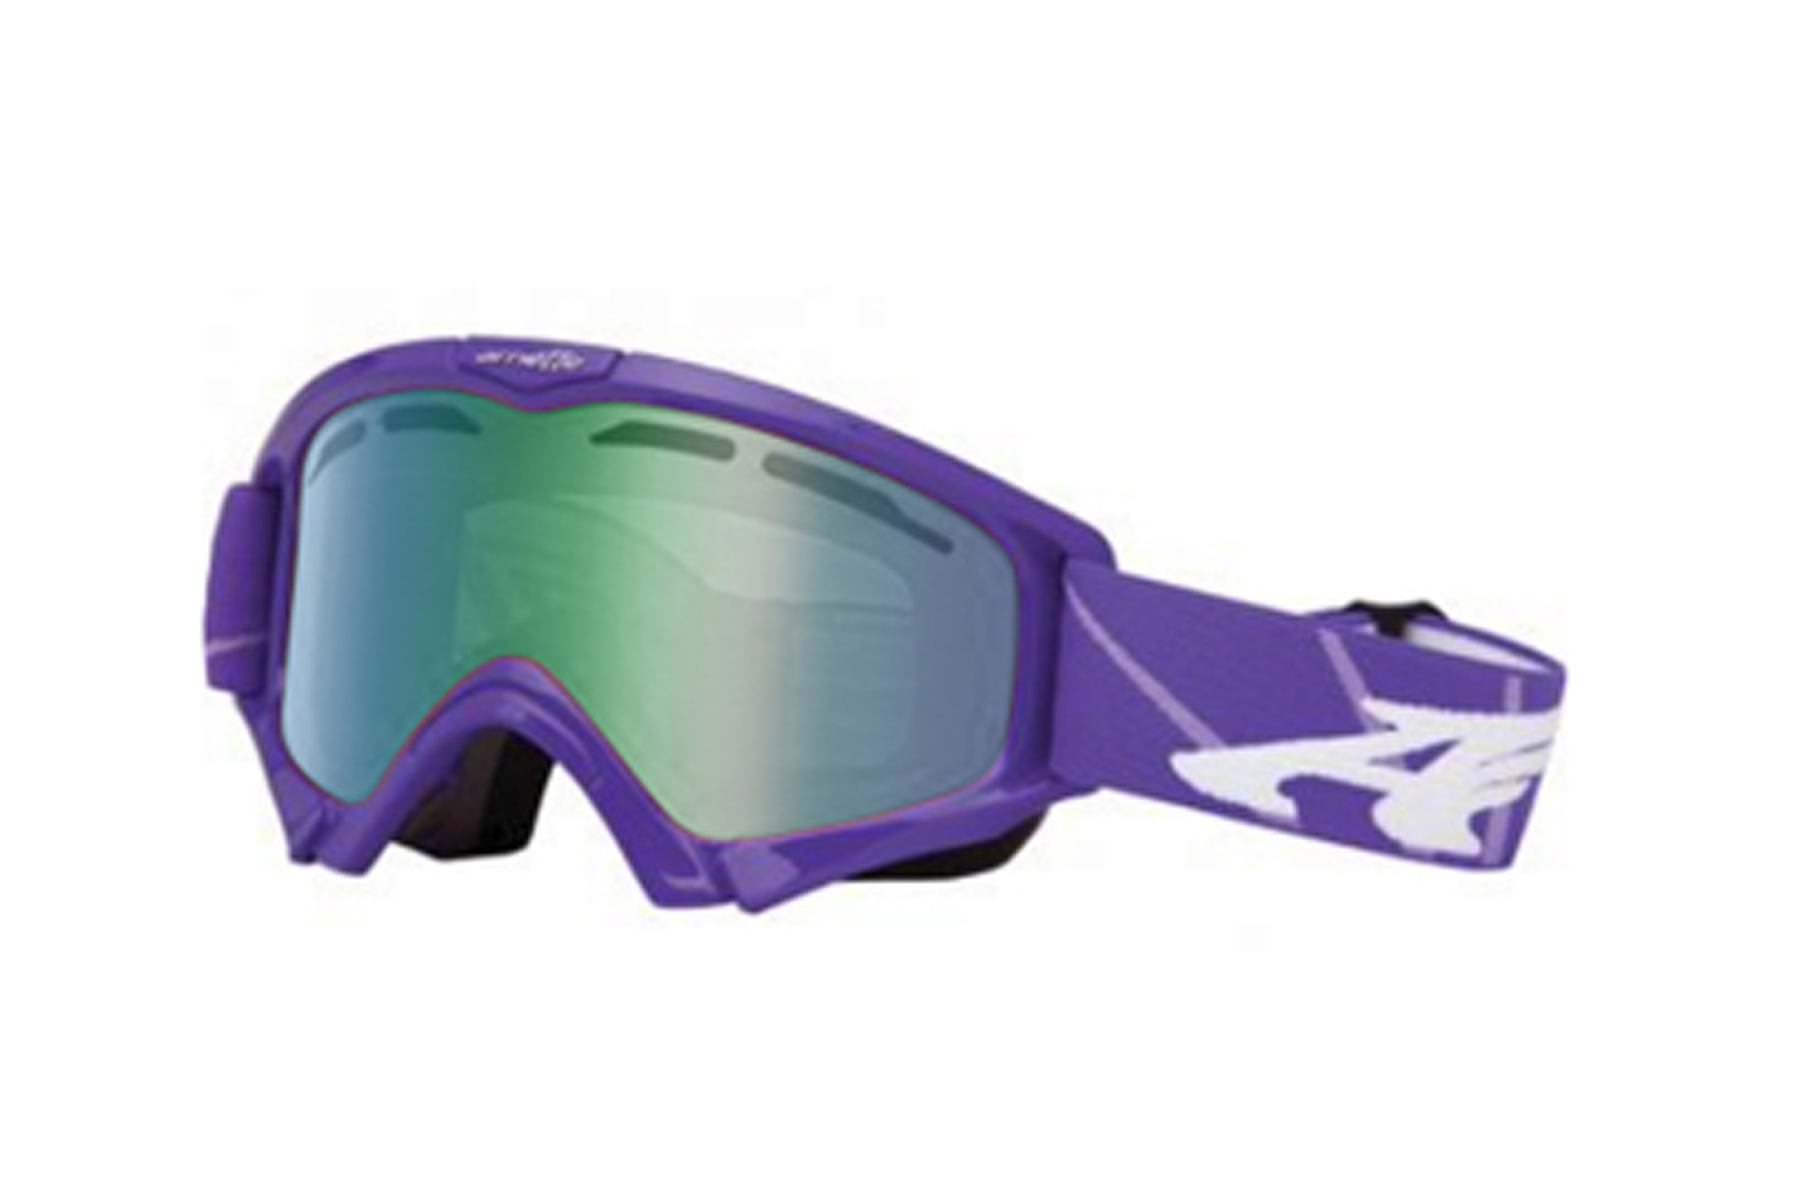 Arnette Mini Series Kid's Snow Goggles AN5005 - Grape w/ Aqua Chrome Lens - image 1 of 1